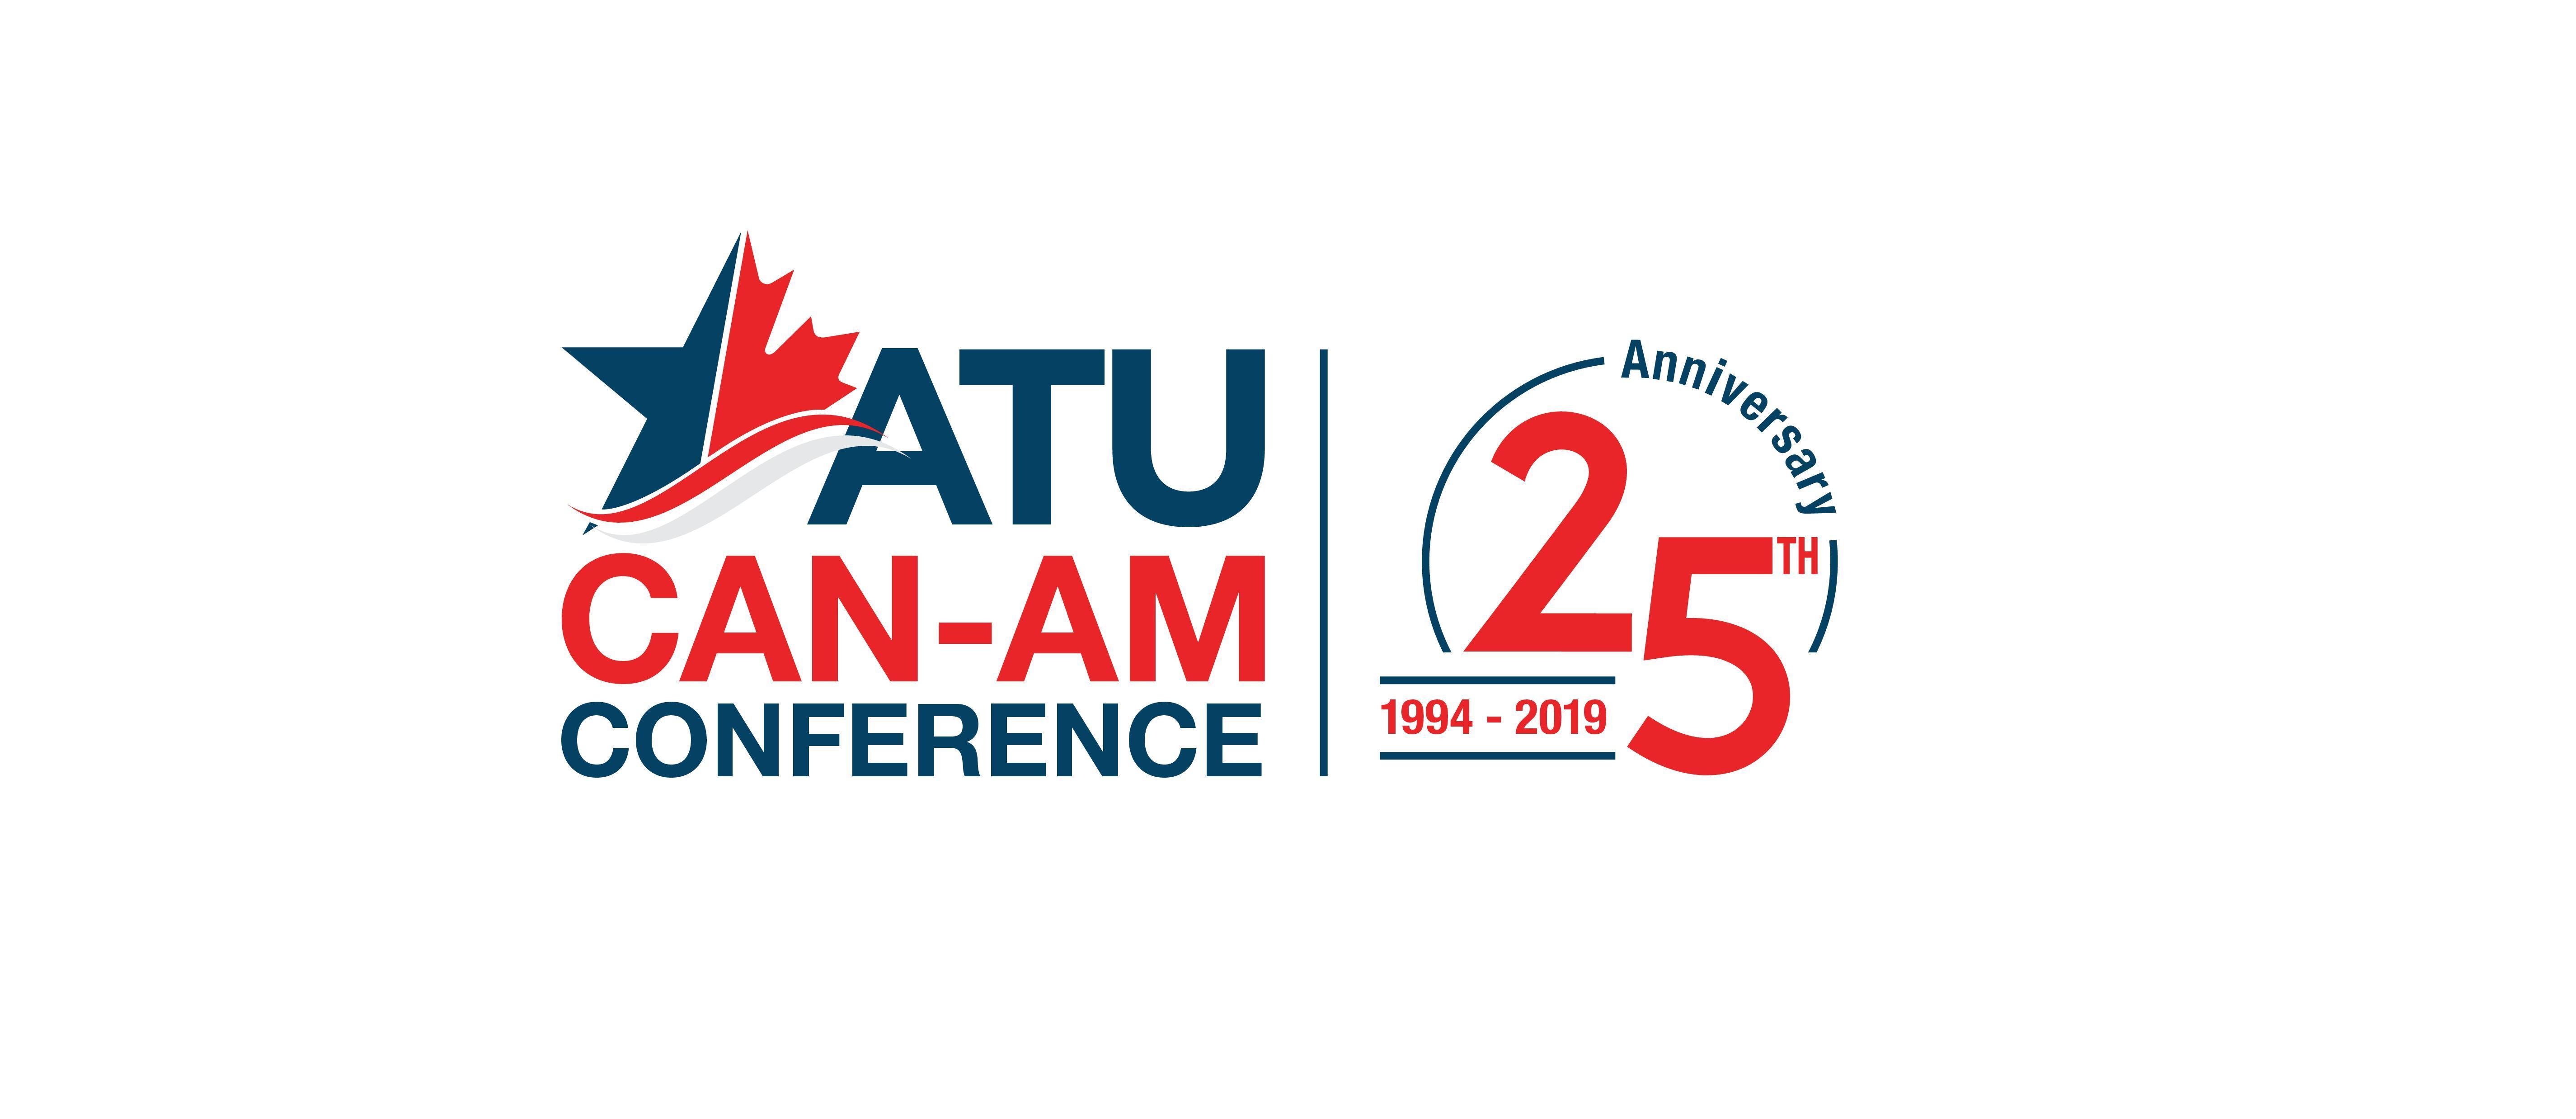 25th Annual ATU CAN-AM Conference - Boston, Massachusetts. 